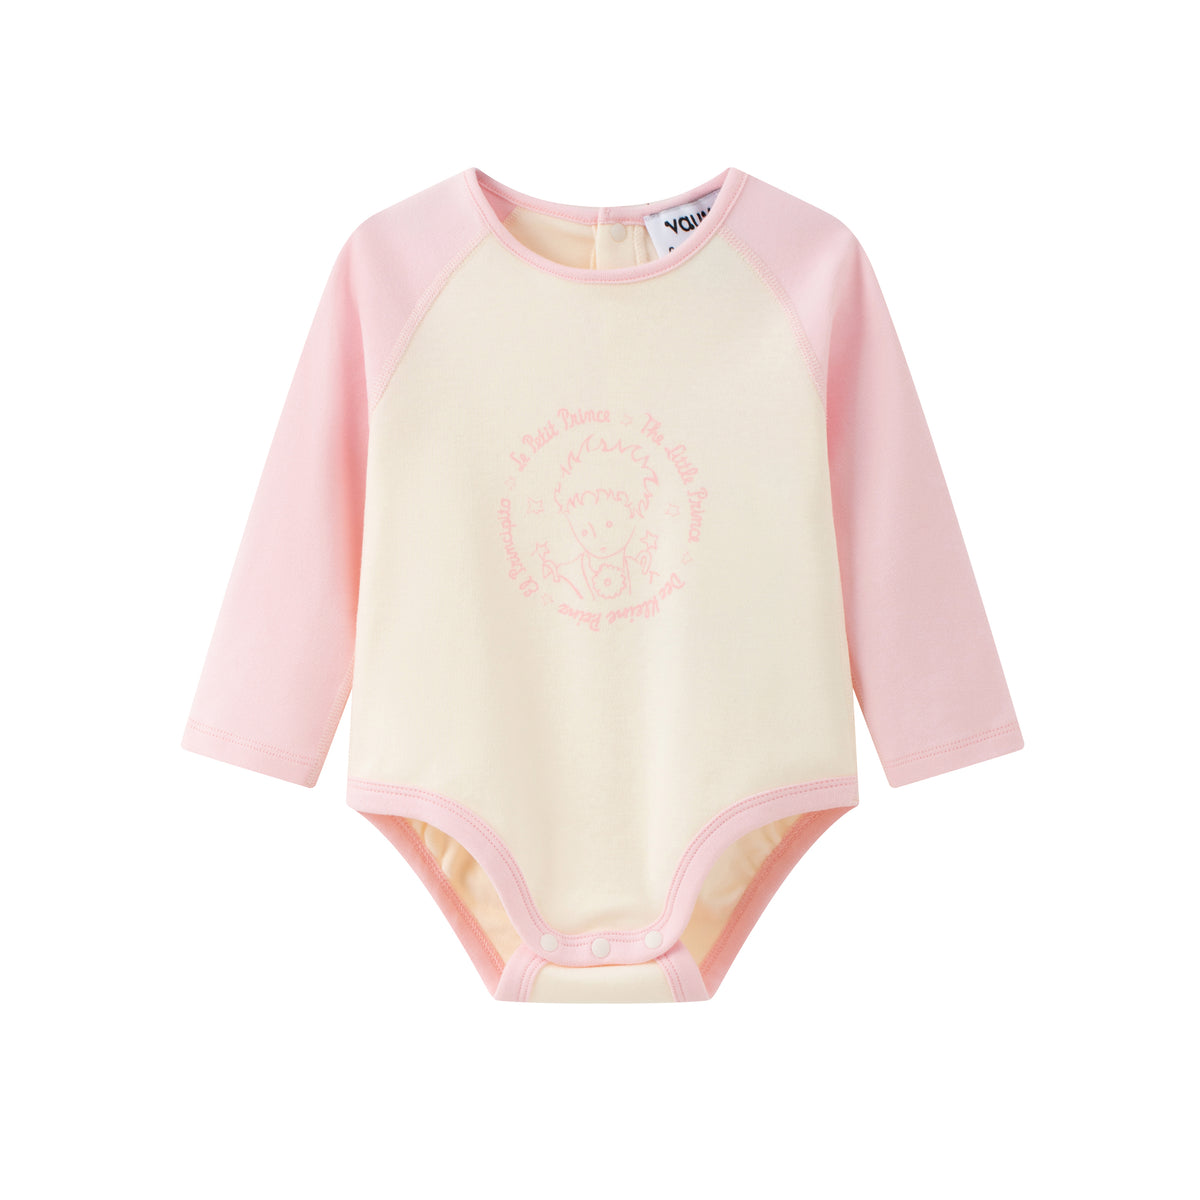 Vauva x Le Petit Prince - Baby Logo Print Longsleeve Bodysuit (Pink) product image front